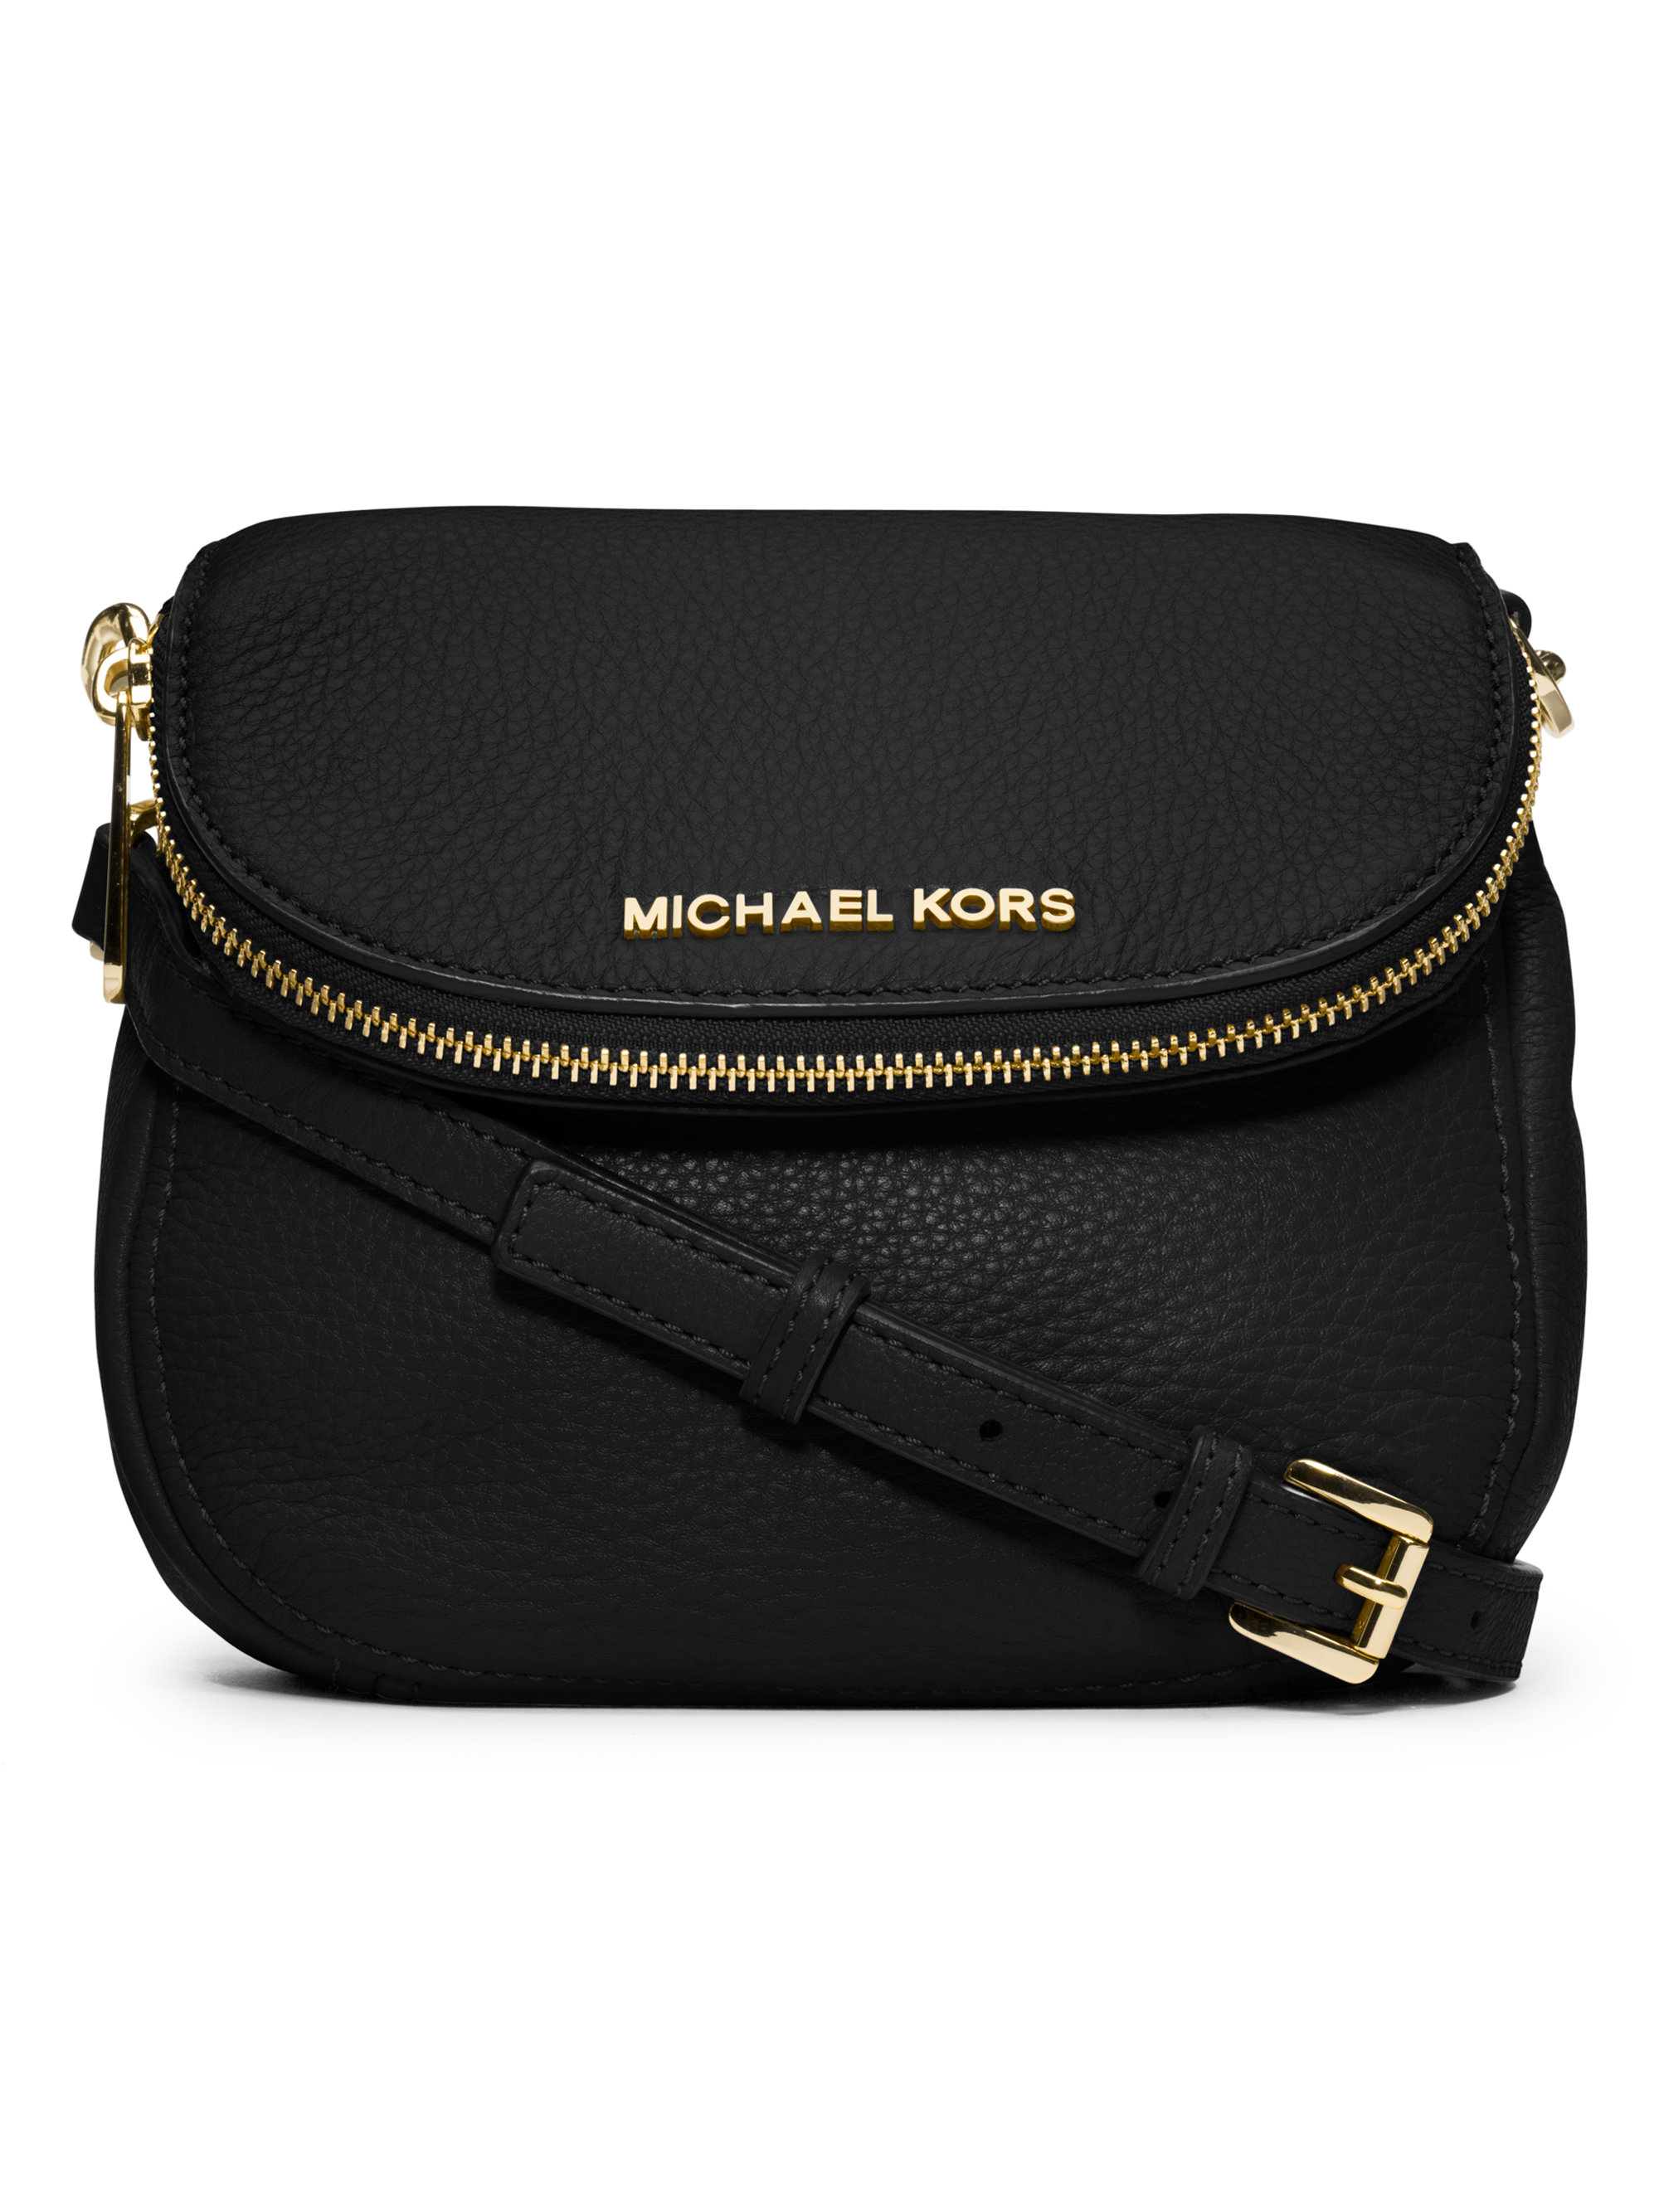 MICHAEL Michael Kors Bedford Small Leather Crossbody Bag in Black - Lyst